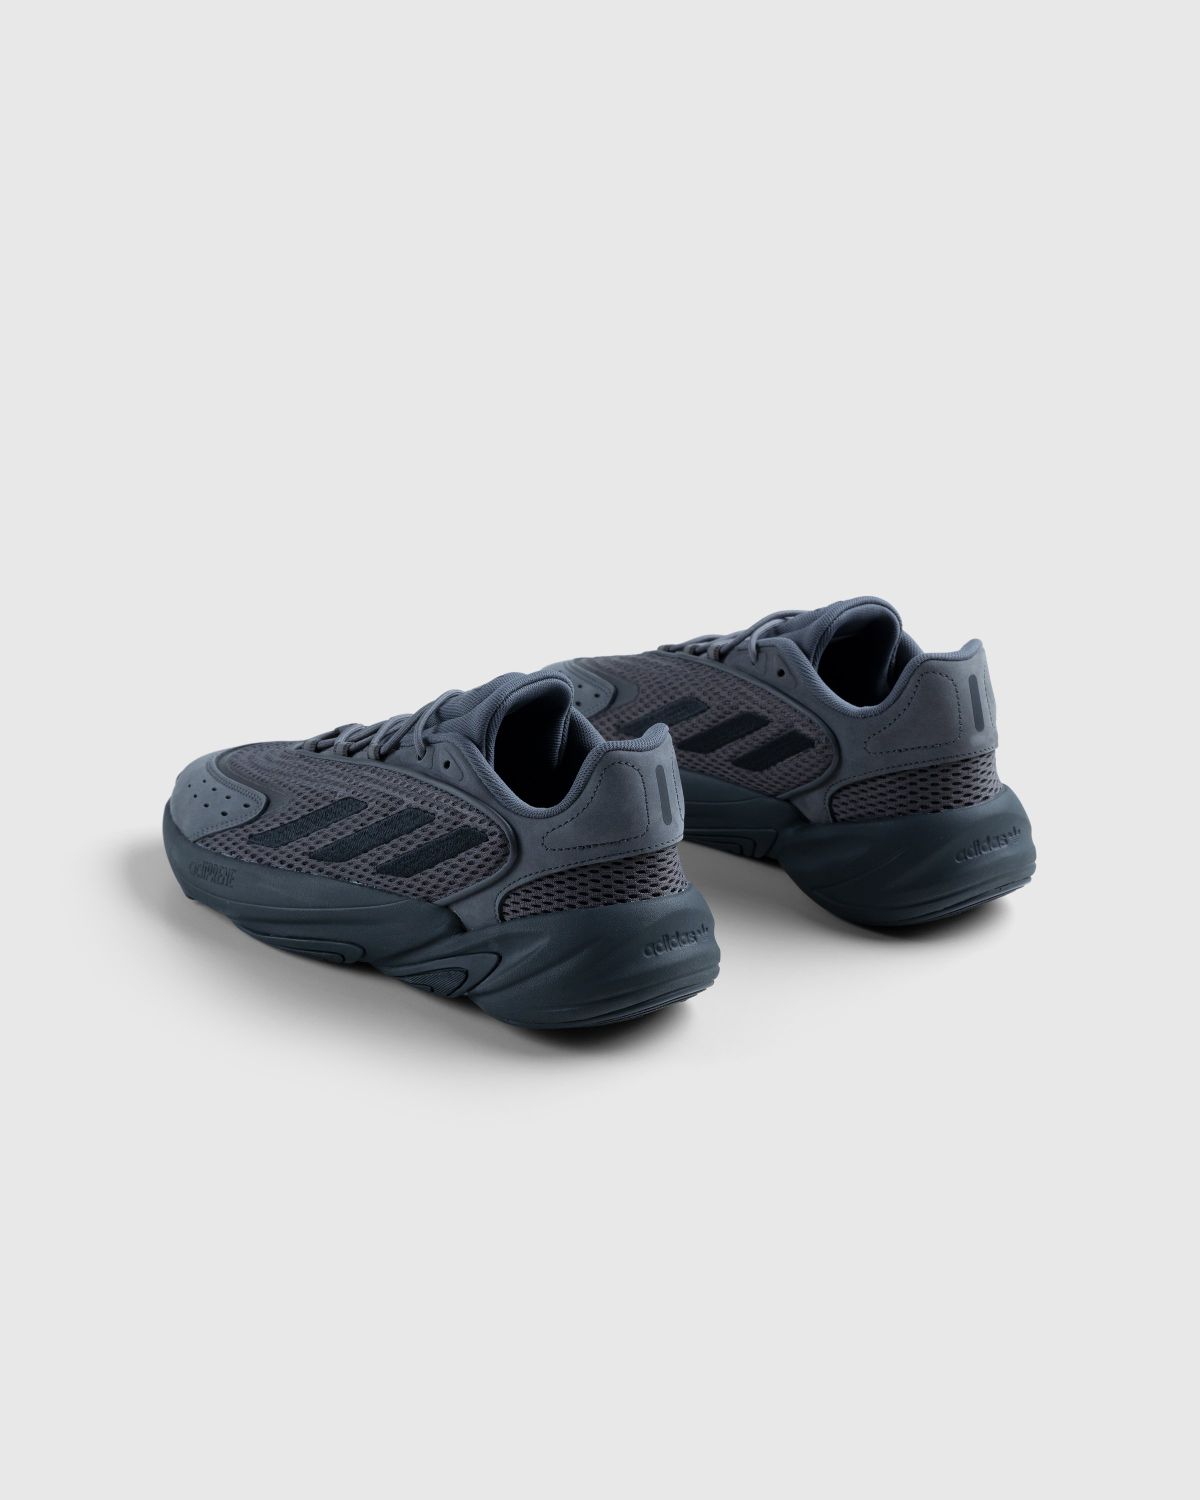 Adidas – Ozelia Grey/Carbon - Low Top Sneakers - Black - Image 4